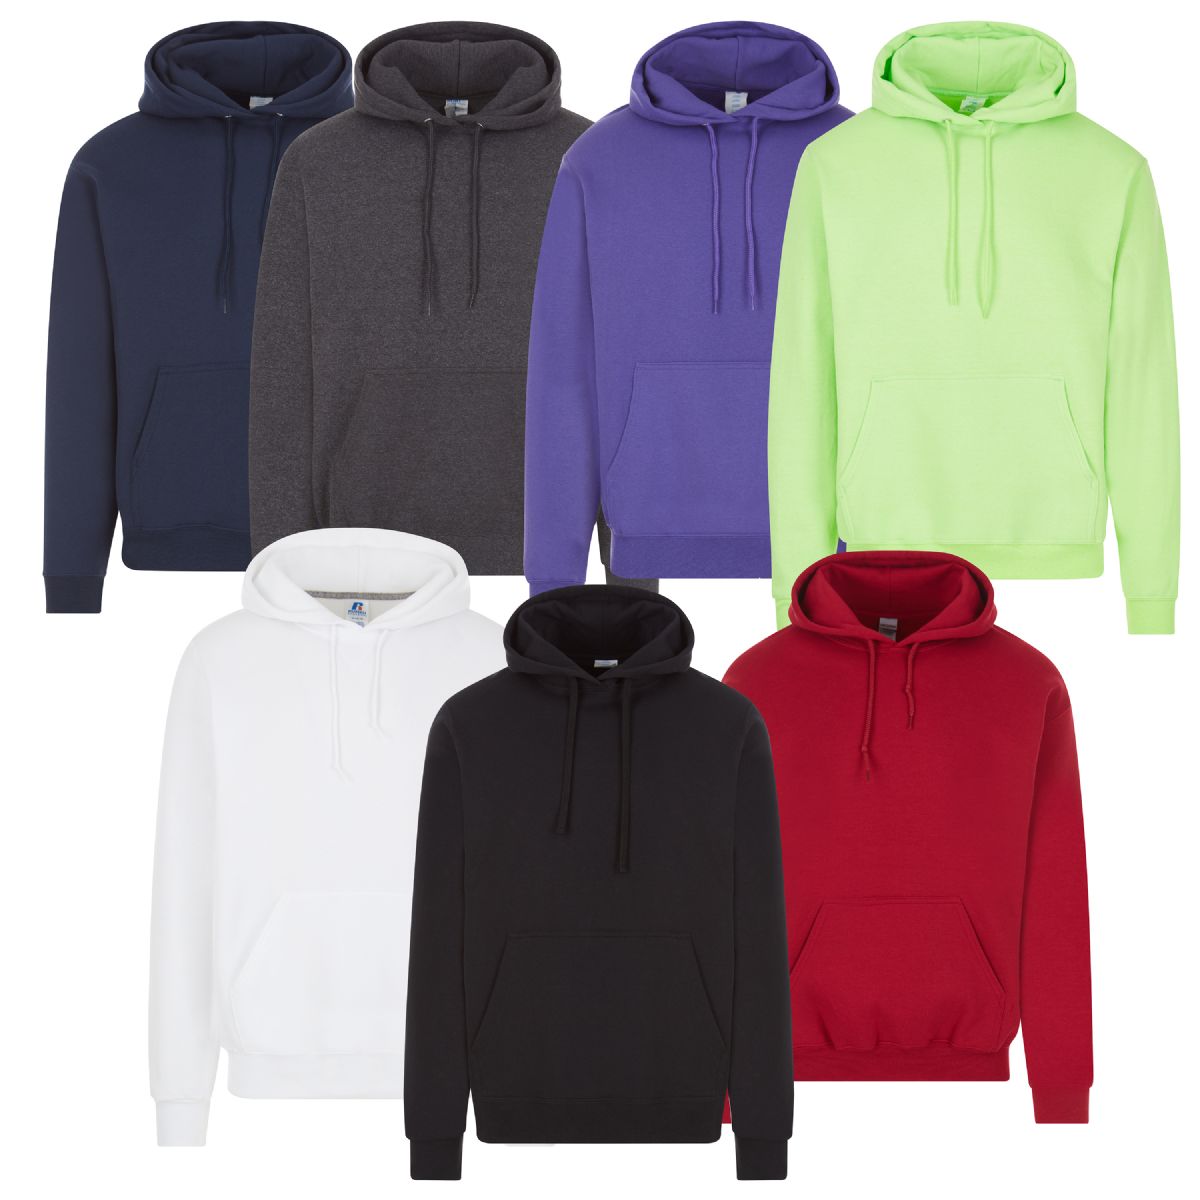 24 Pieces of Unisex Irregular Cotton Hoodie Sweatshirt In Assorted Colors Small